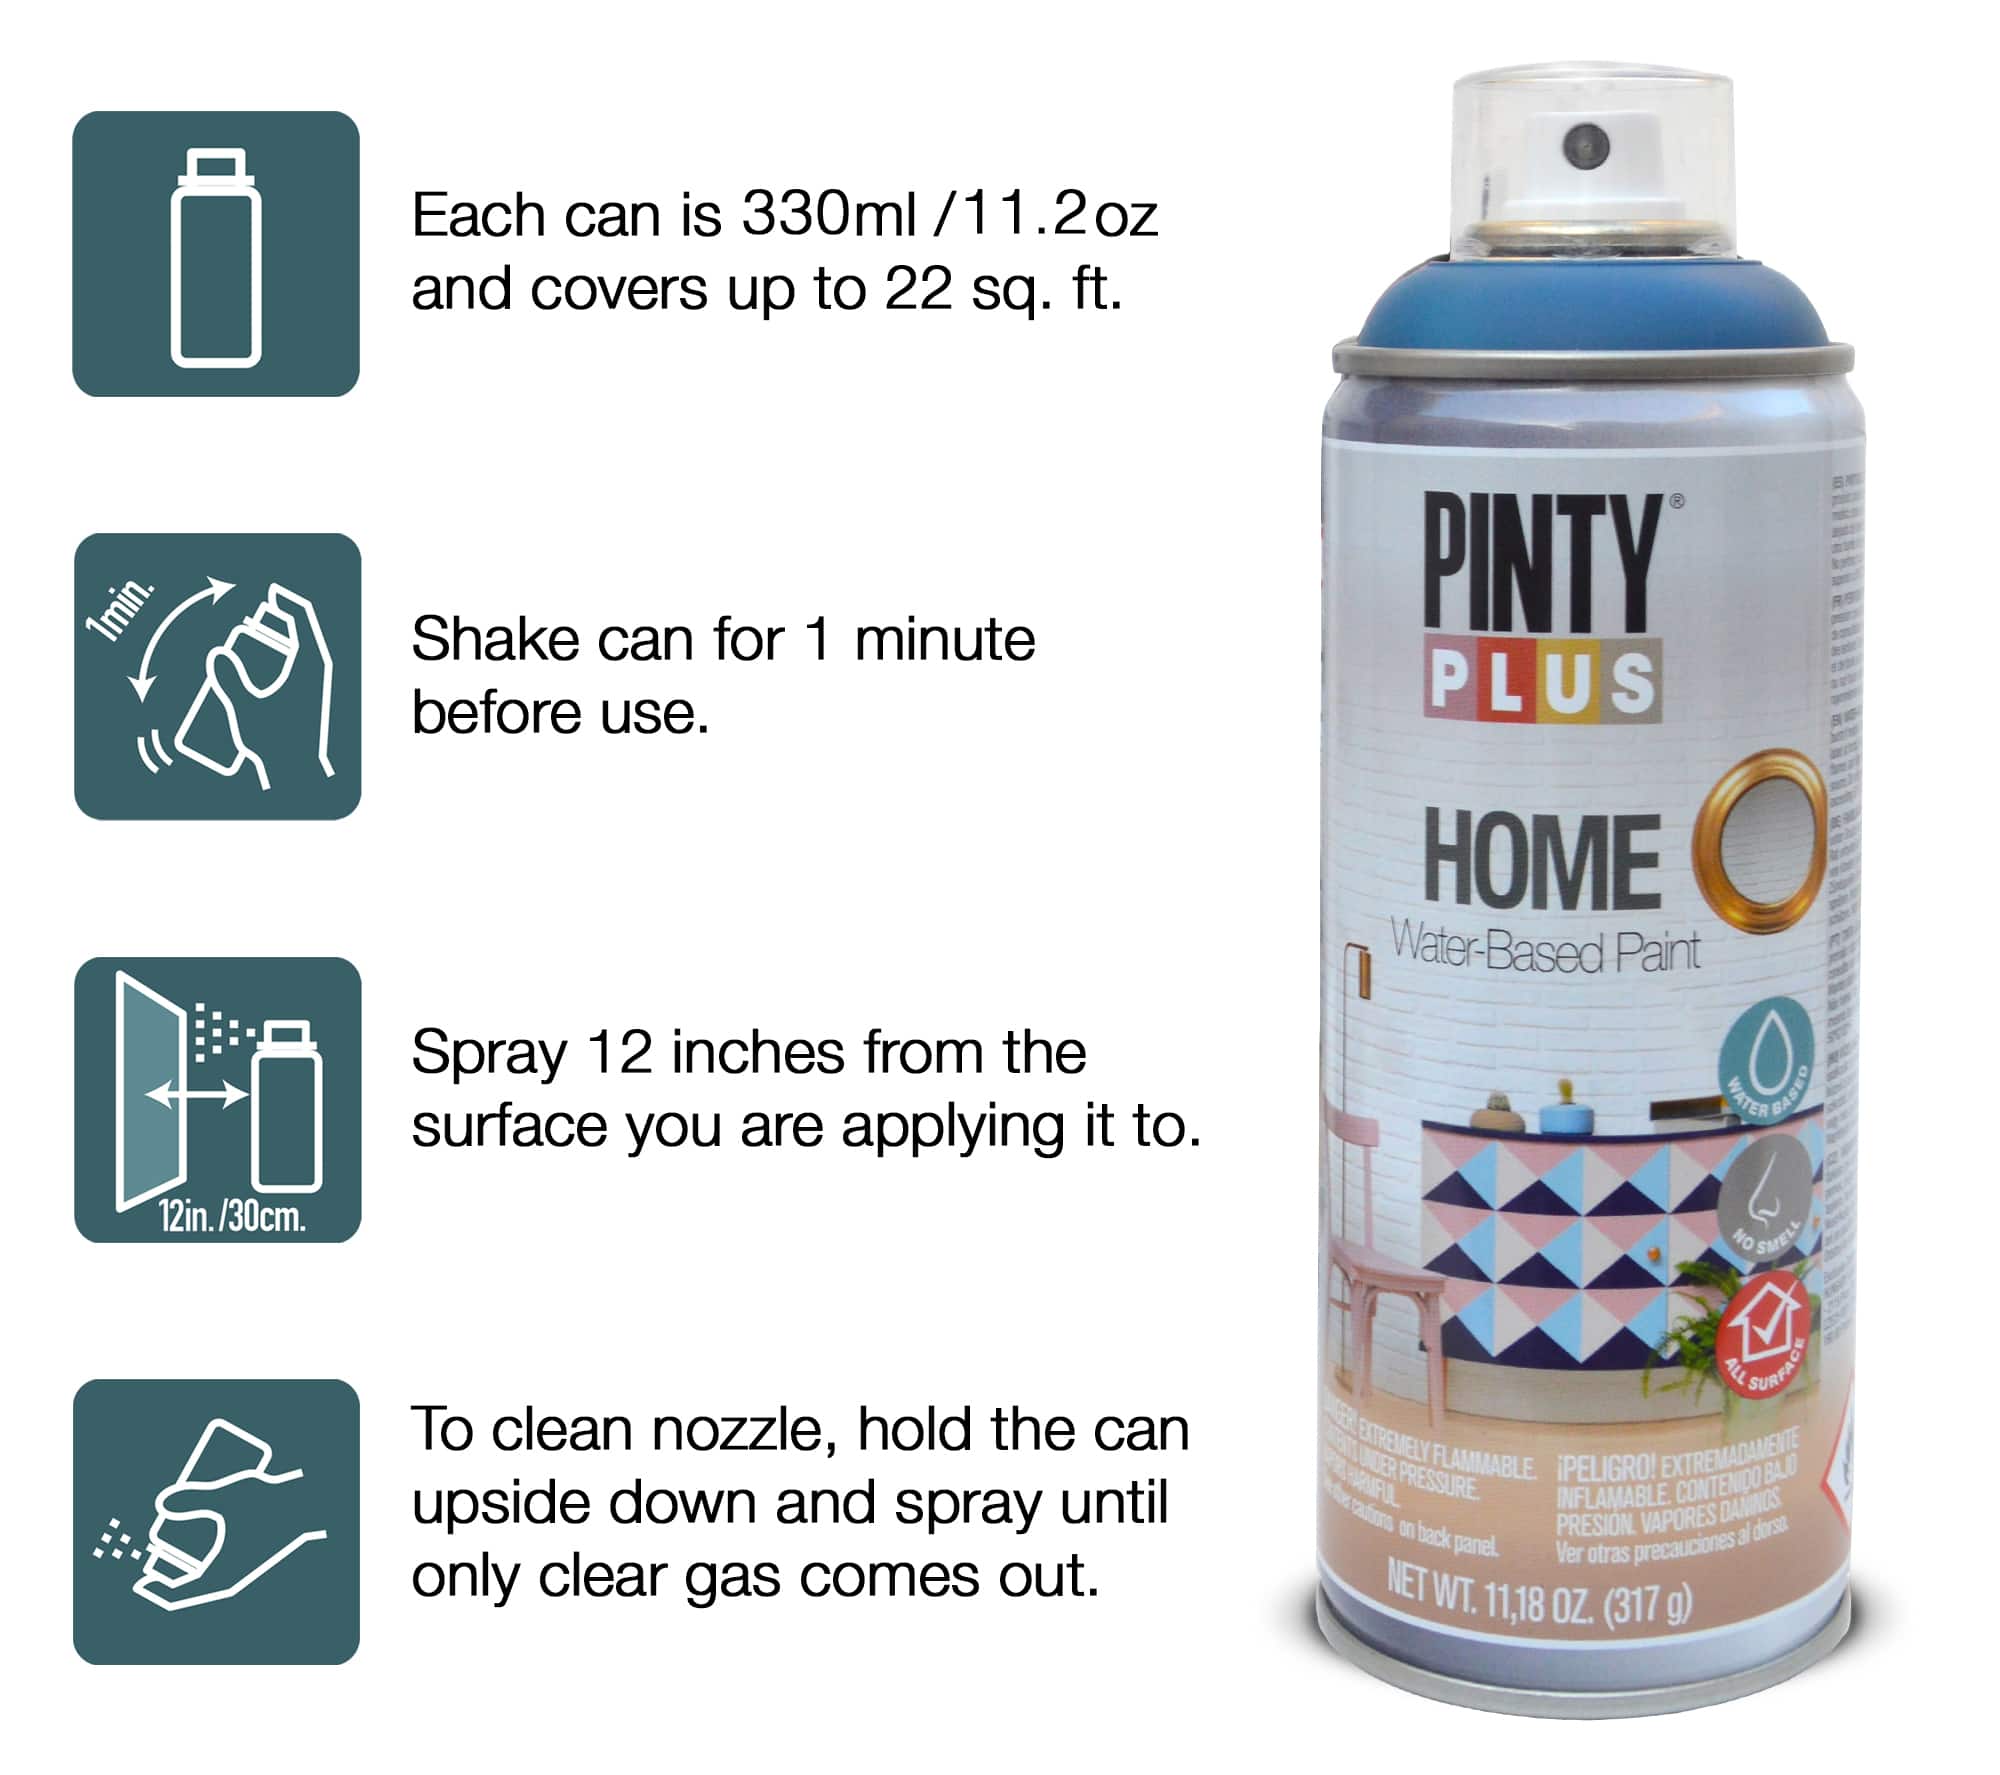 Pintyplus Home Water-Based Spray Paint, 11.18oz.